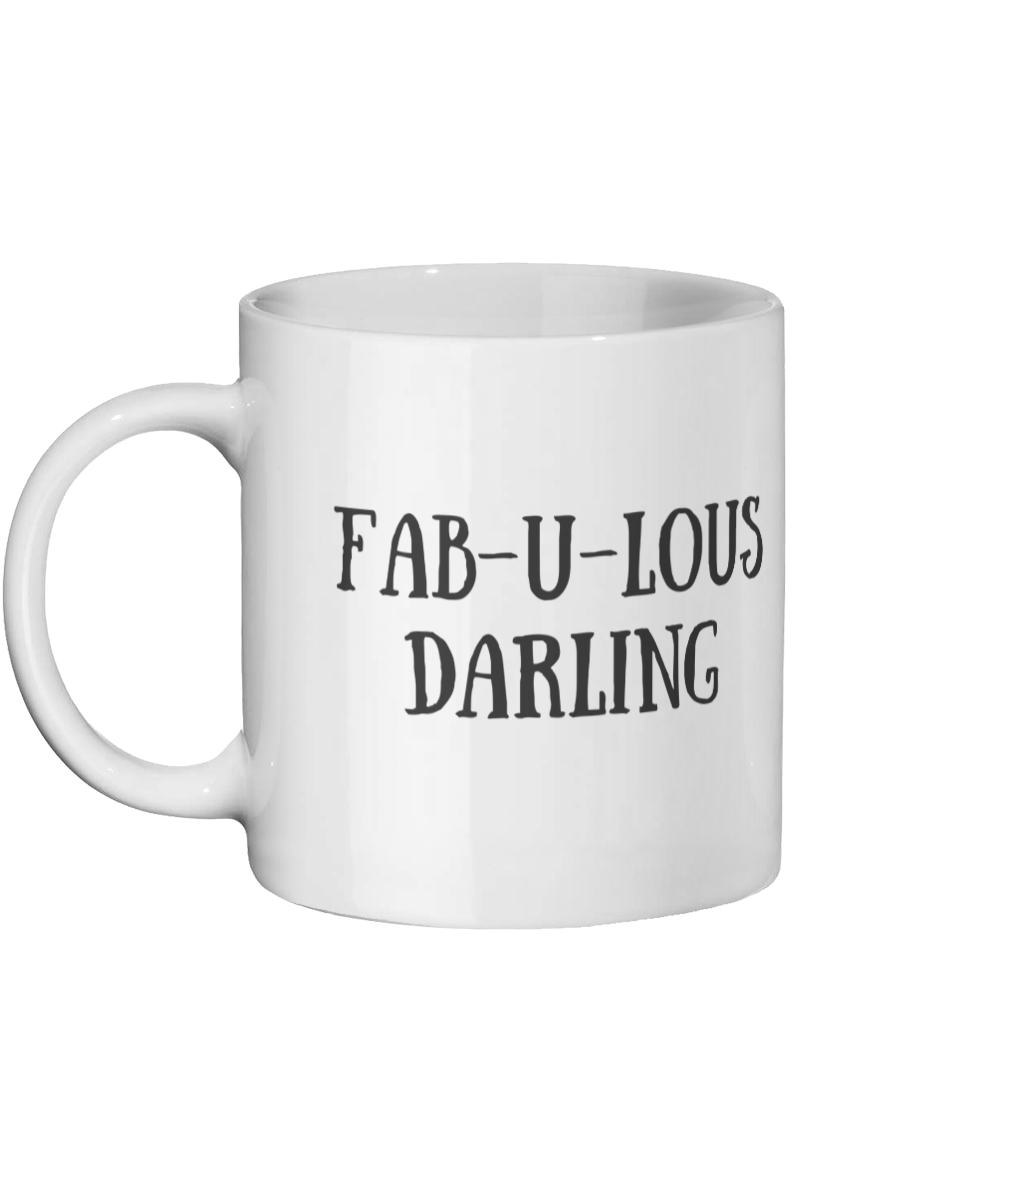 FAB-U-LOUS DARLING Mug Left-side